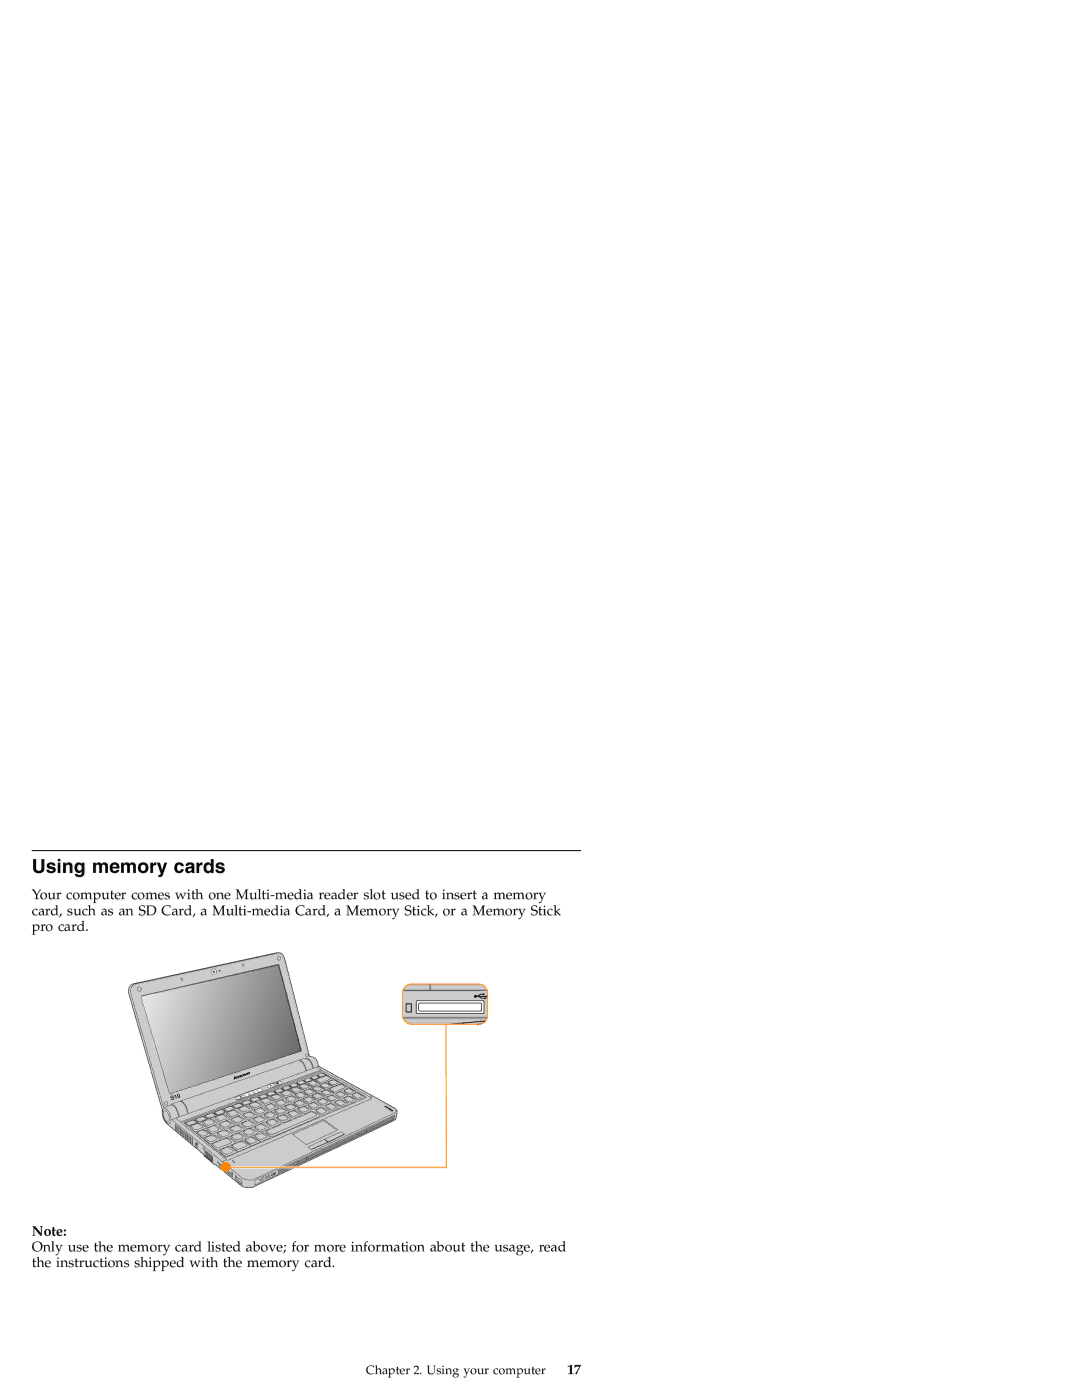 Lenovo S10 manual Using memory cards 